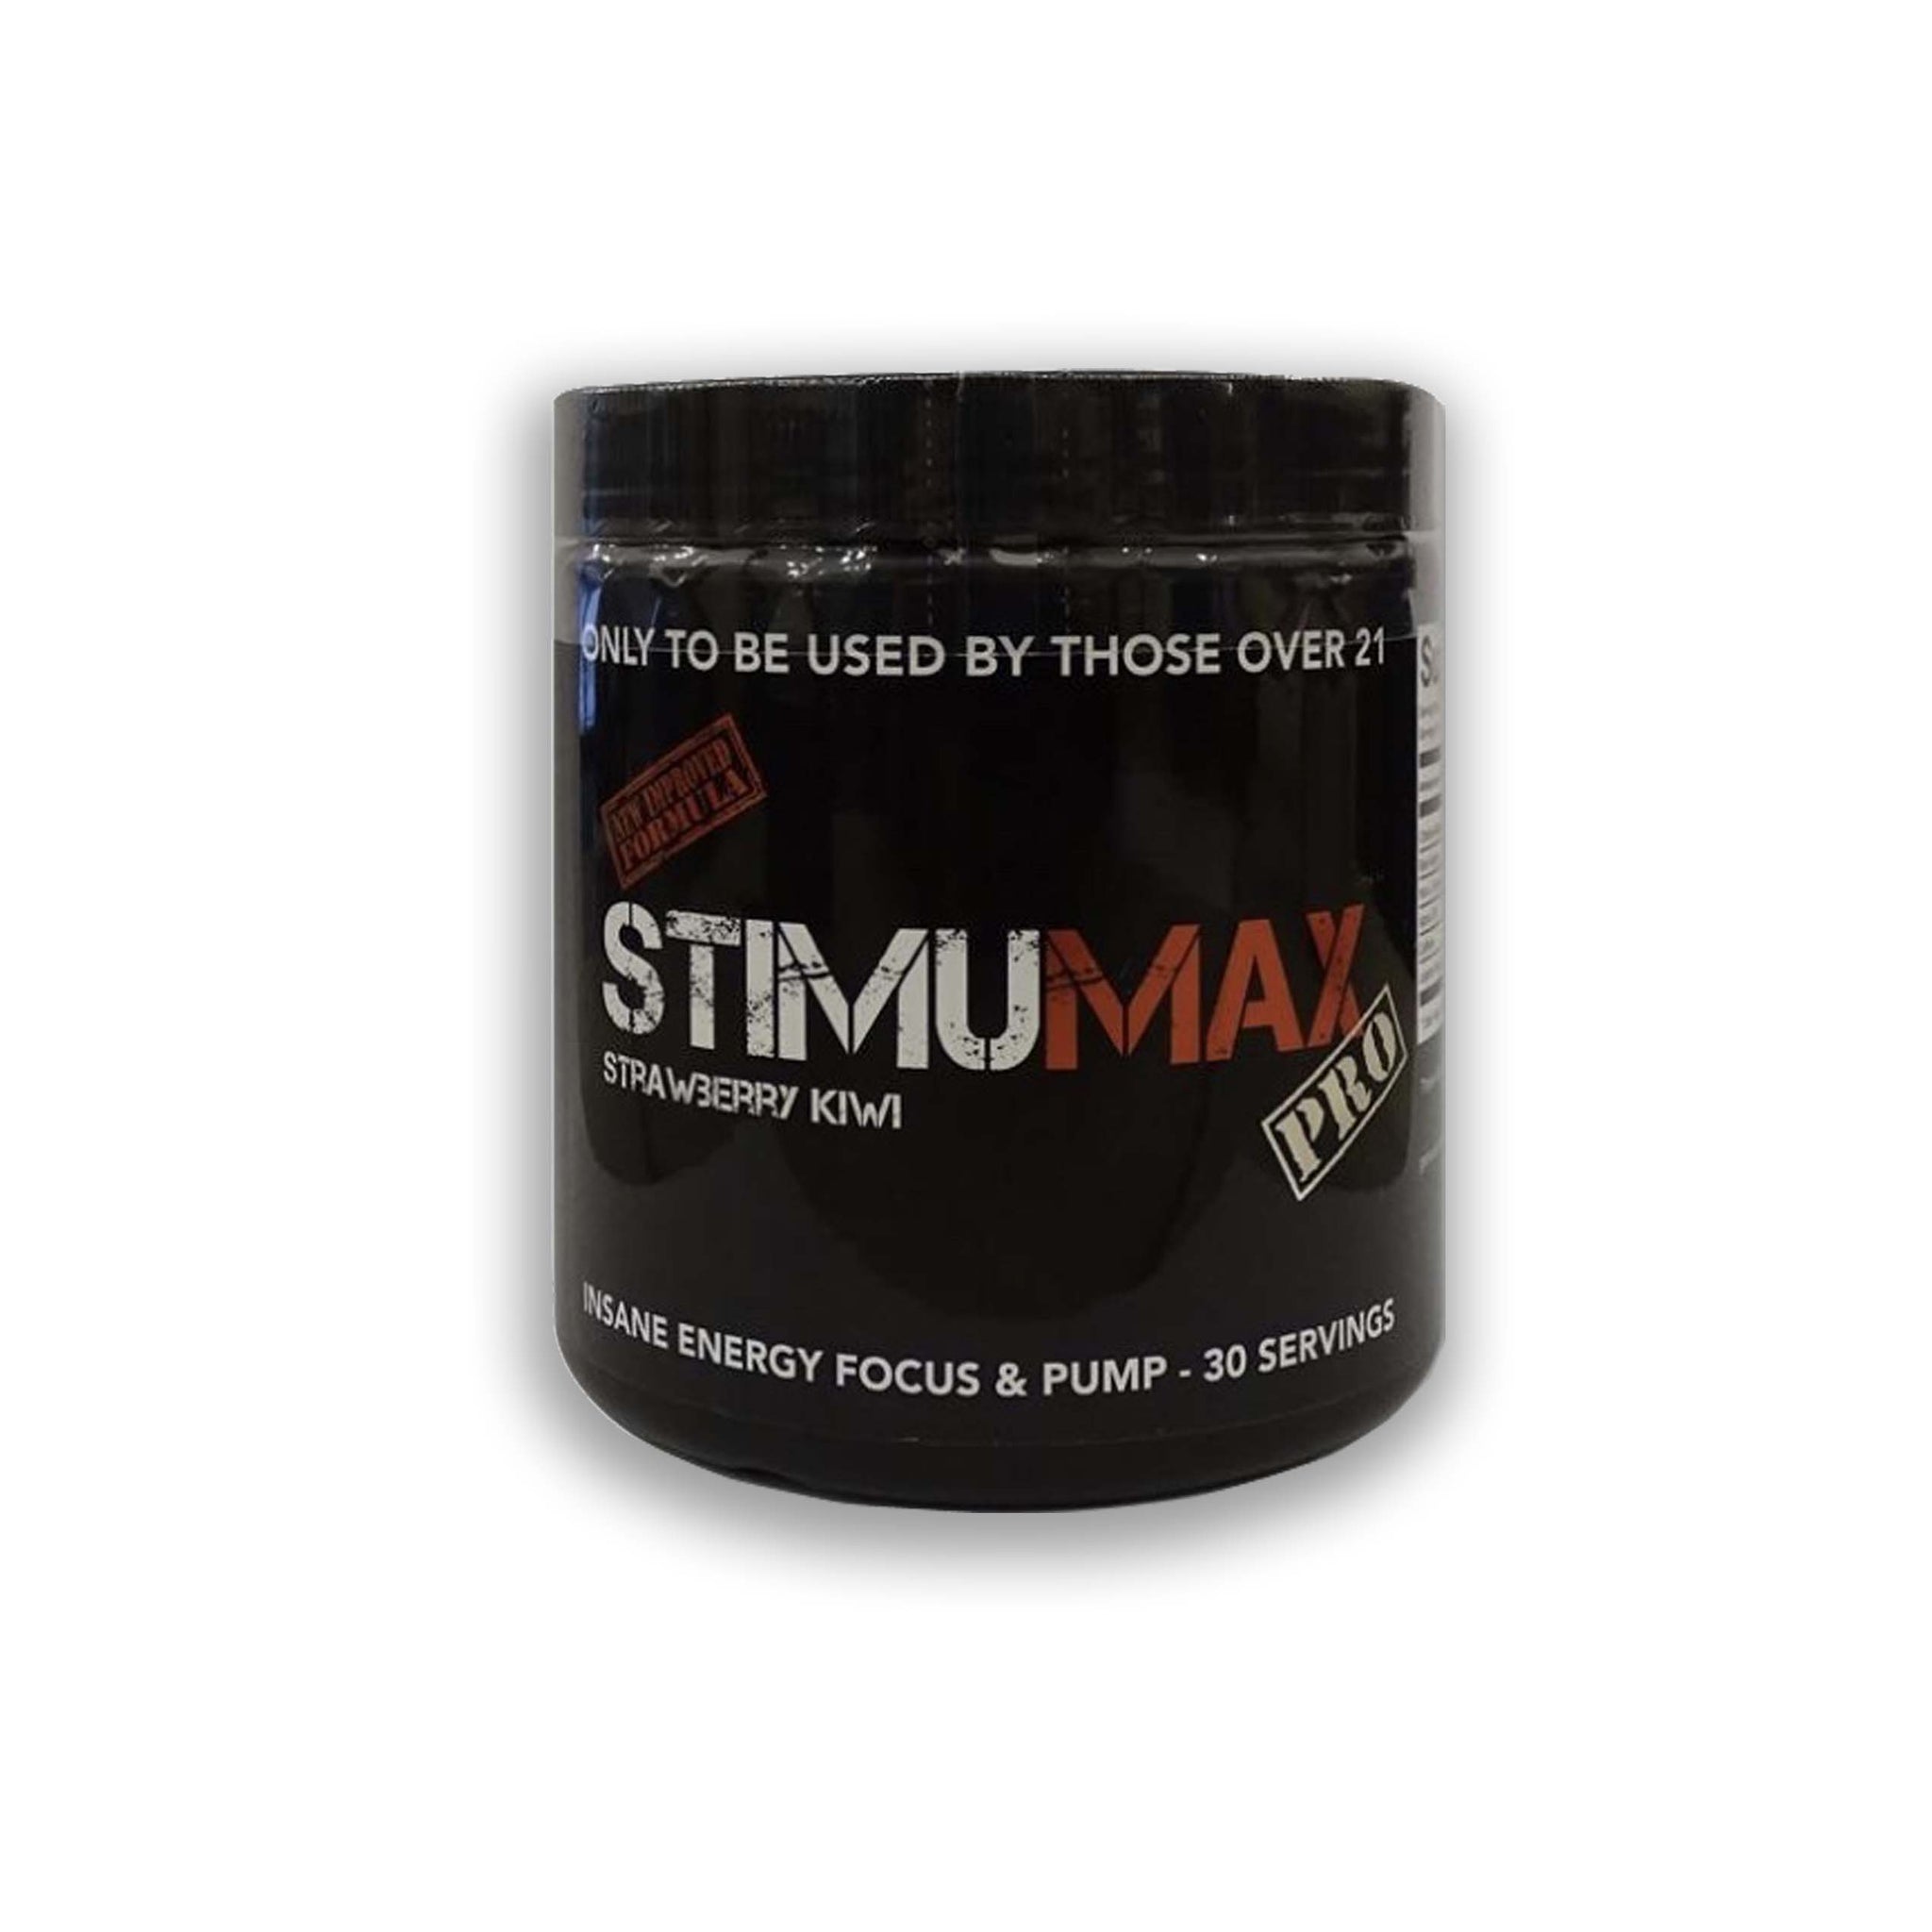 Stimumax black edition pre workout - Full Boar Sports